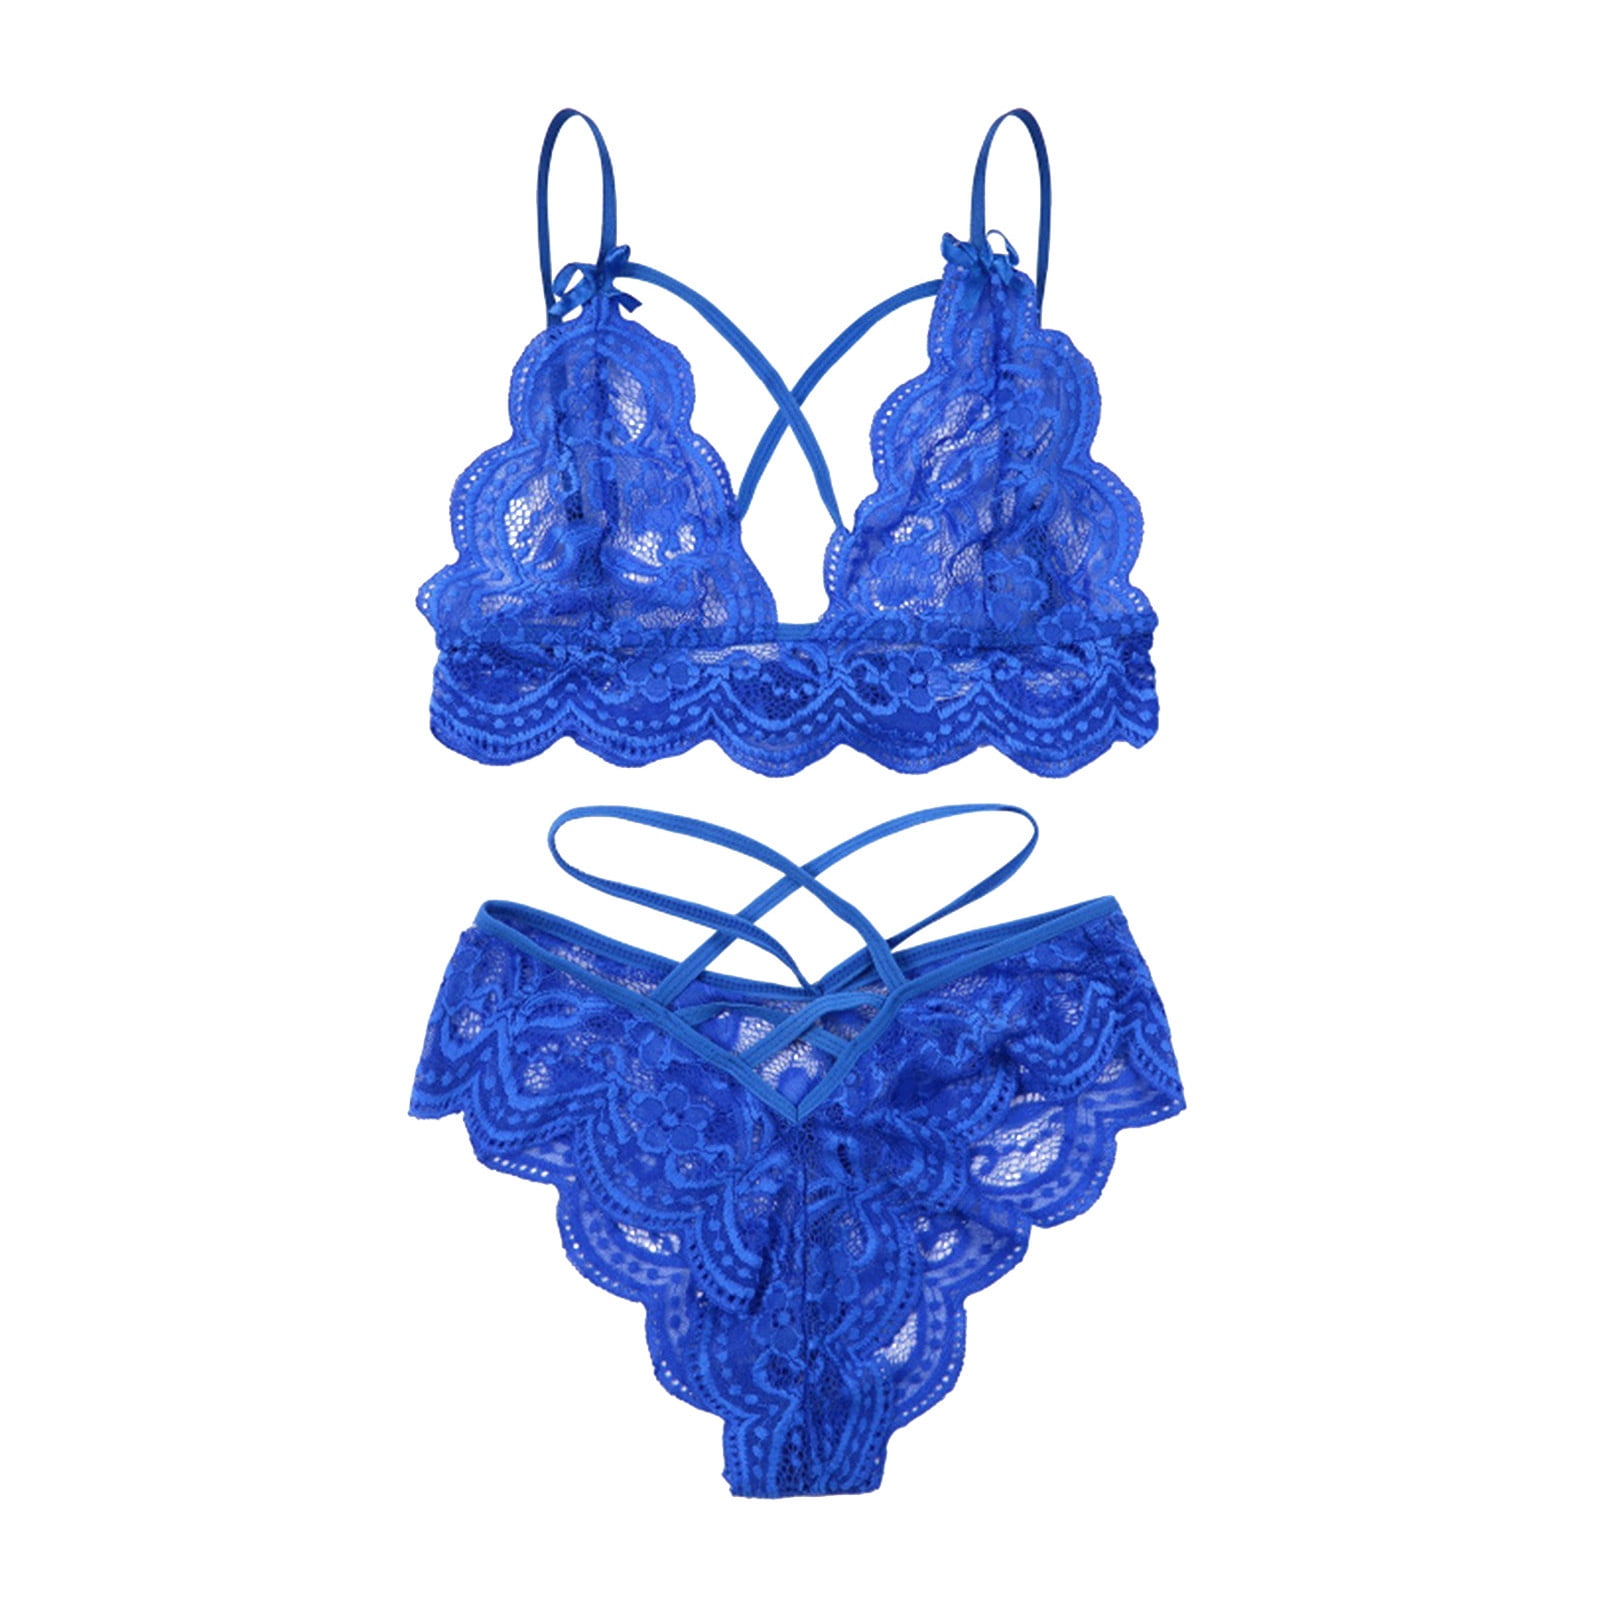 Buy OMLAVIDA Net Lace Padded Pushup Underwired Lingerie Bra Panty Set  (Blue, 30) at